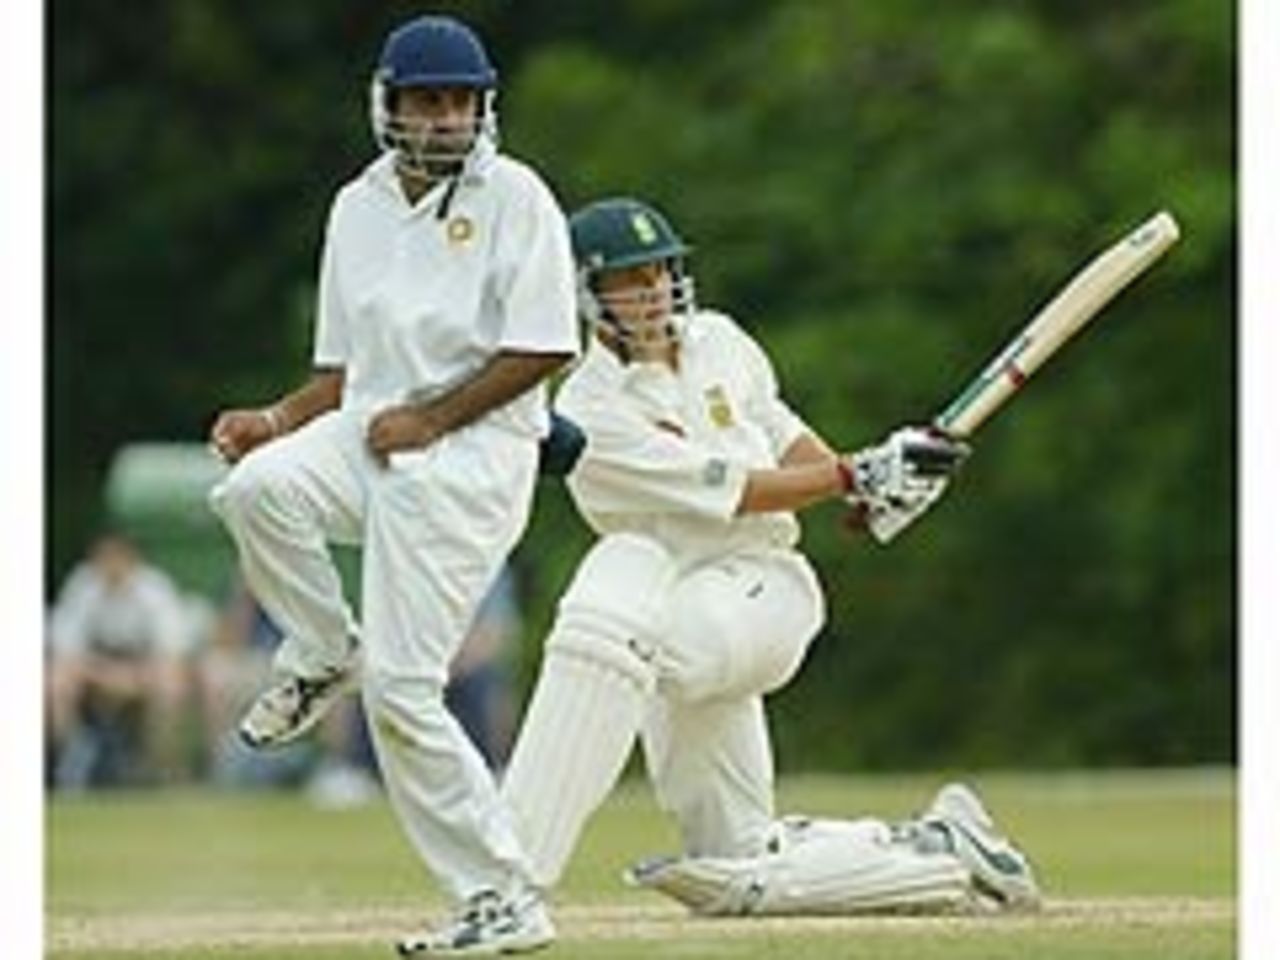 Boeta Dippenaar sweeps, India A v South Africa, Arundel, July 20, 2003